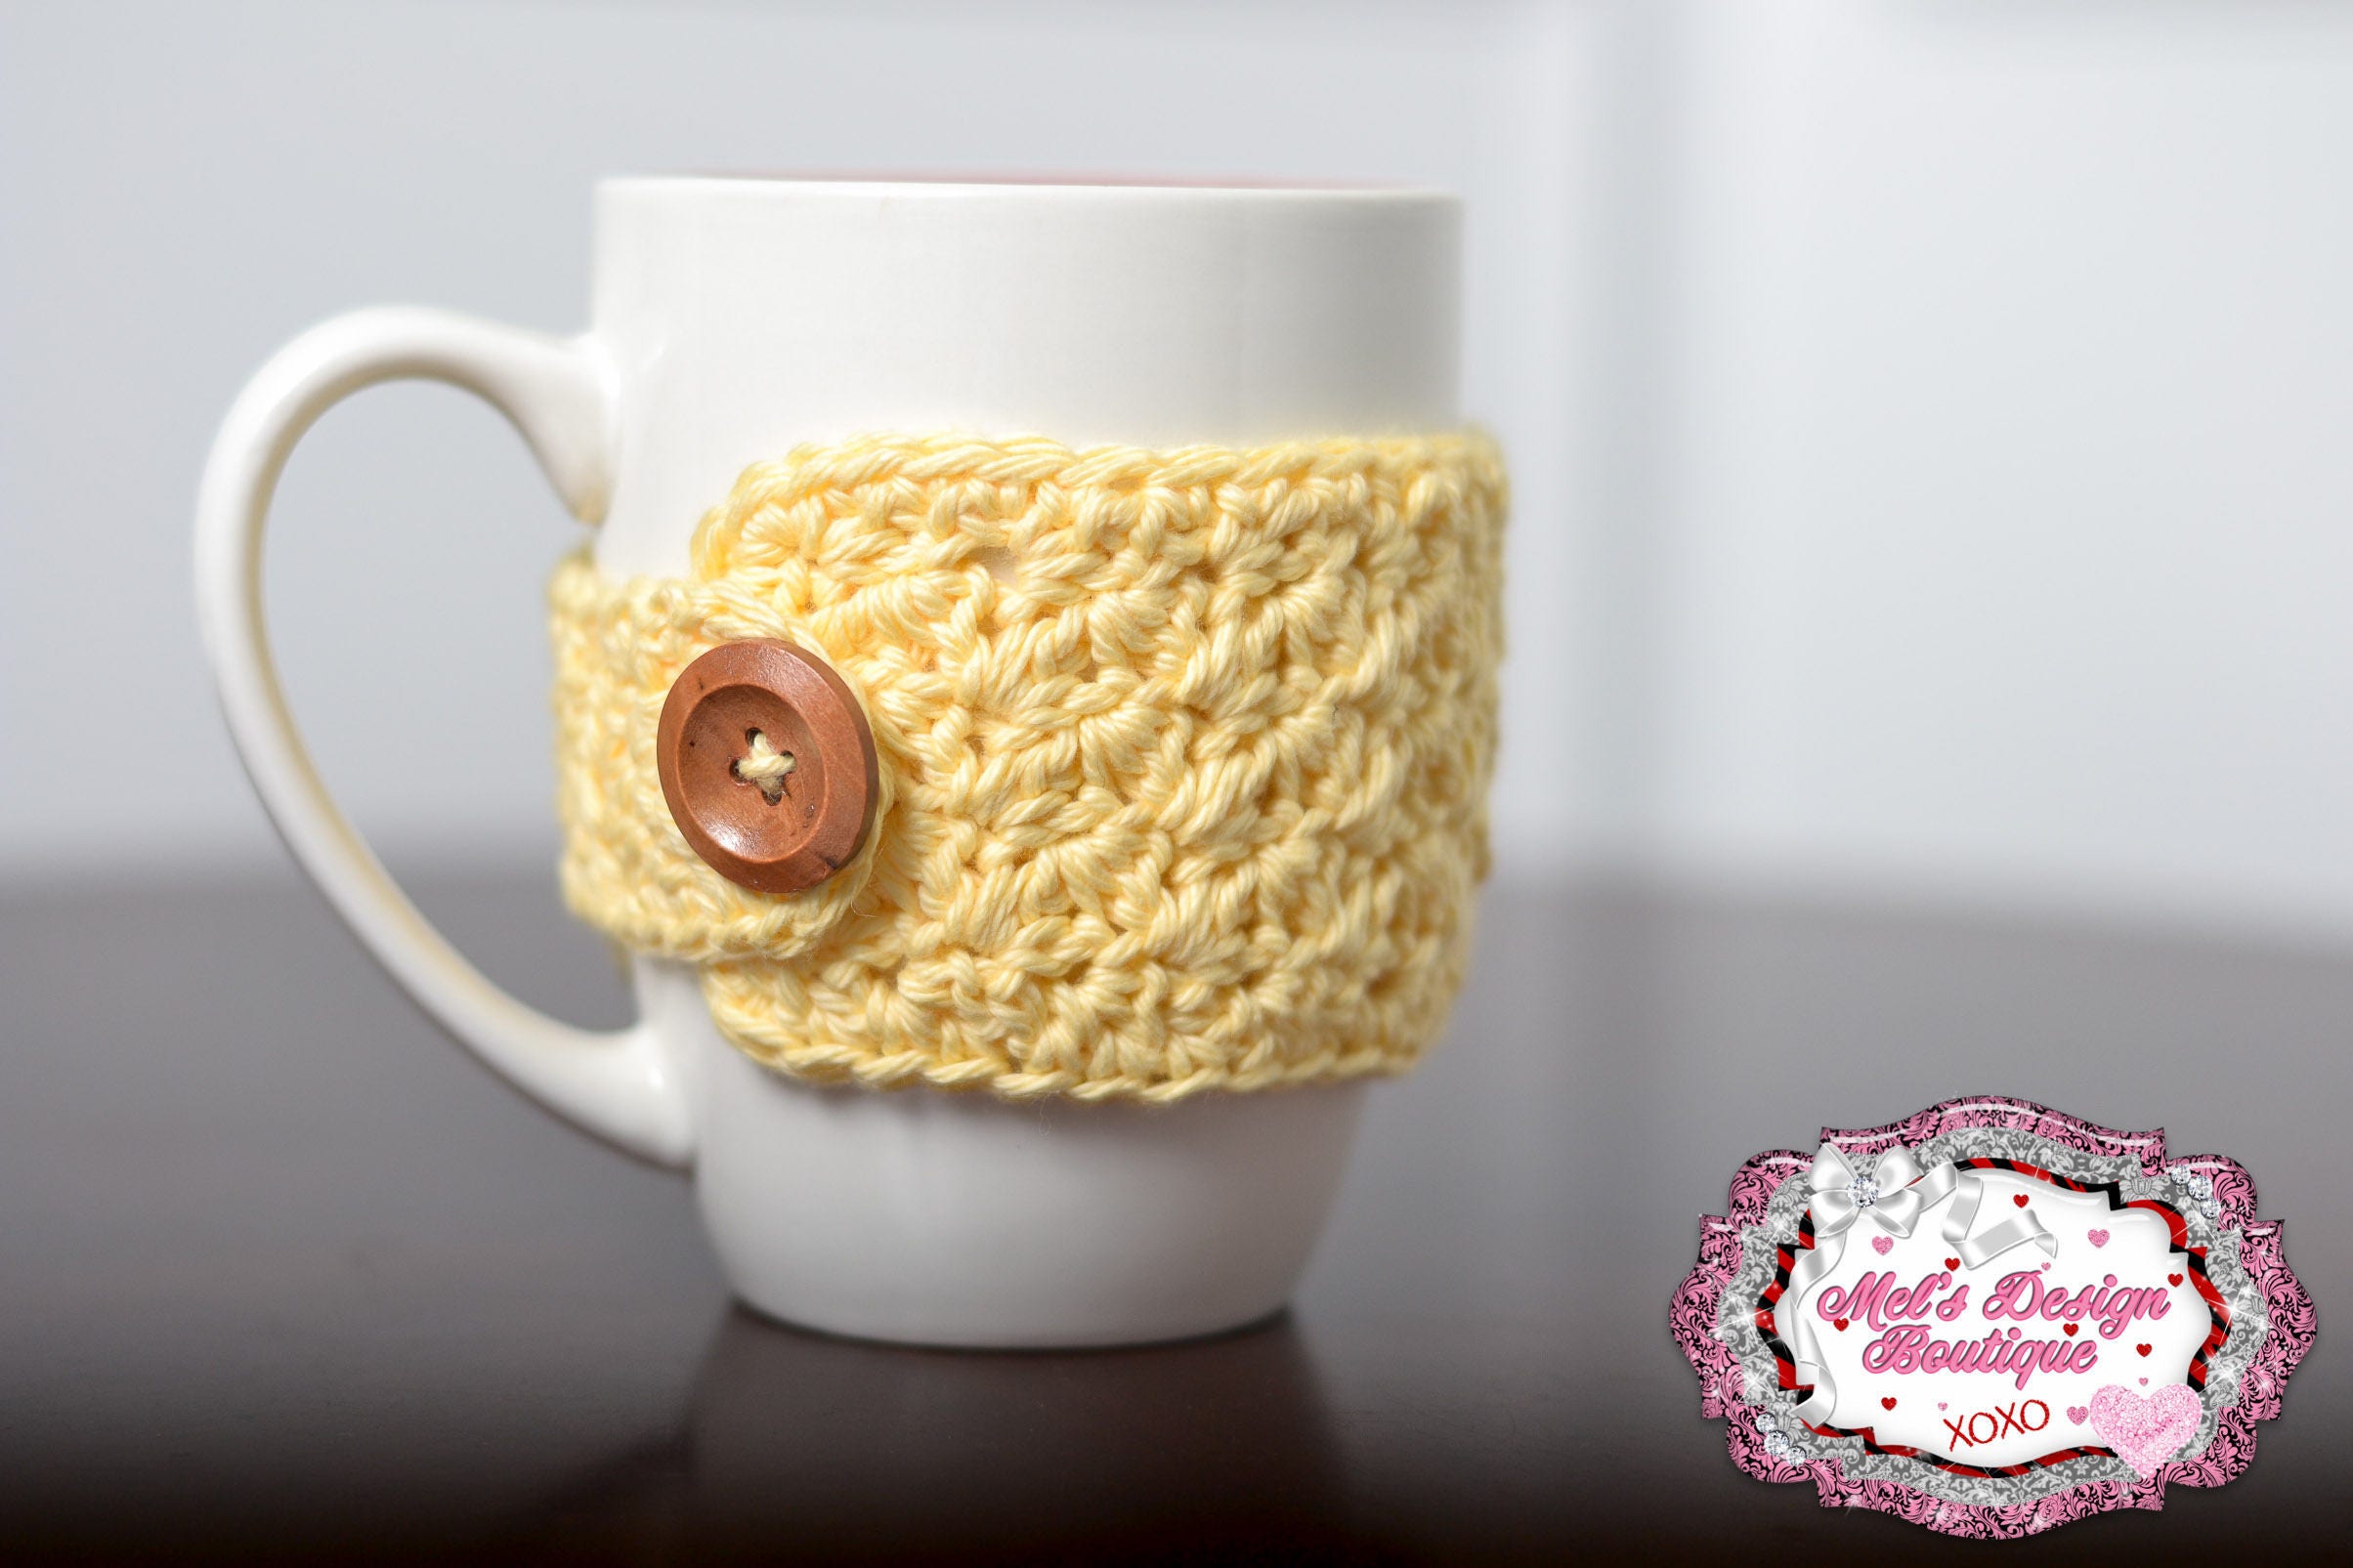 Ceramic Coffee Mug With USB Mug Warmer and Tea Spoon for Office Home Work  or Student Gift 